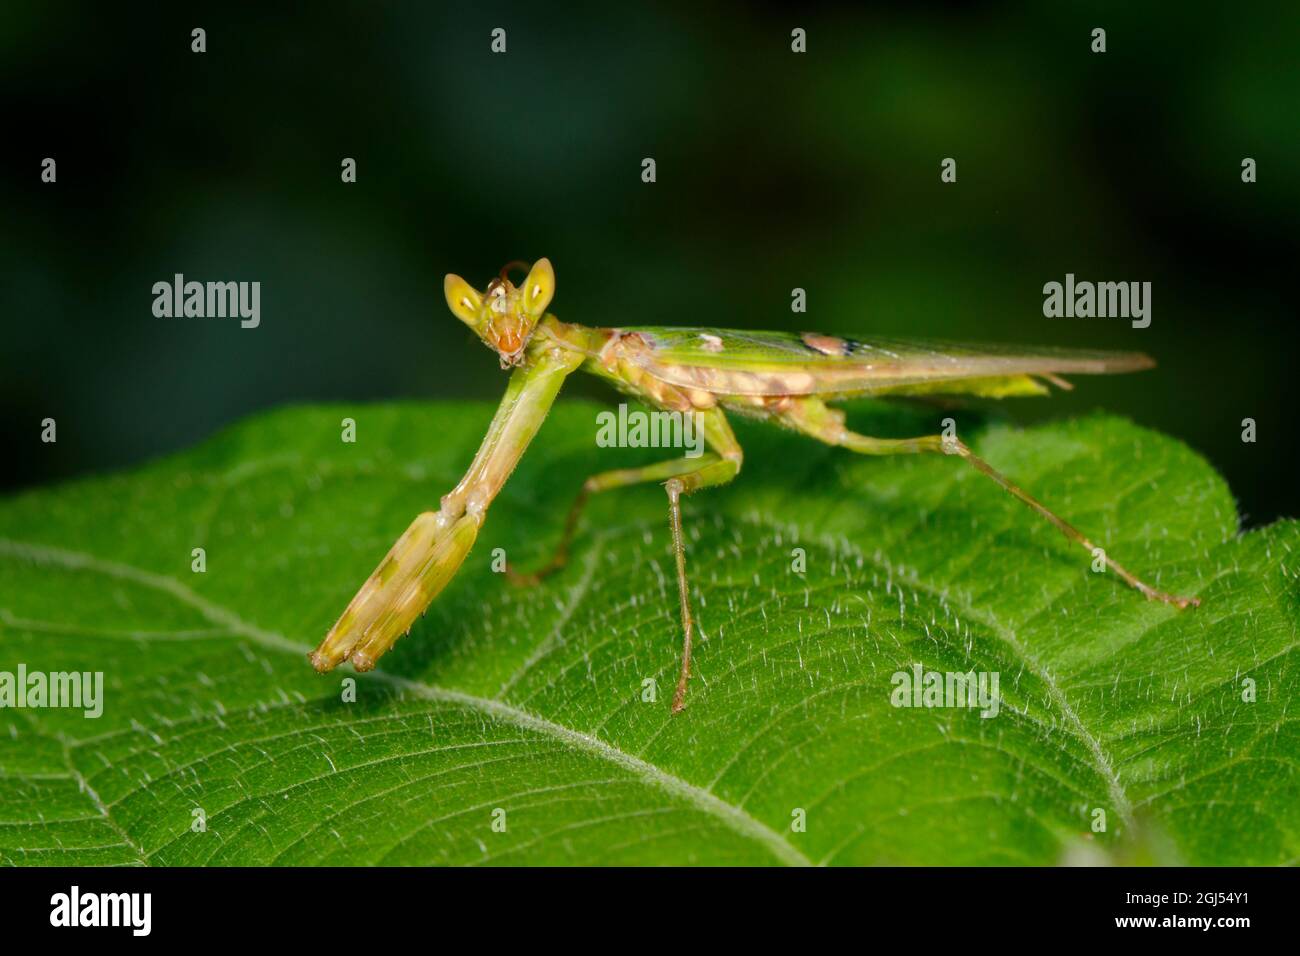 Image of flower mantis(Creobroter gemmatus) on green leaves. Insect, Animal. Stock Photo